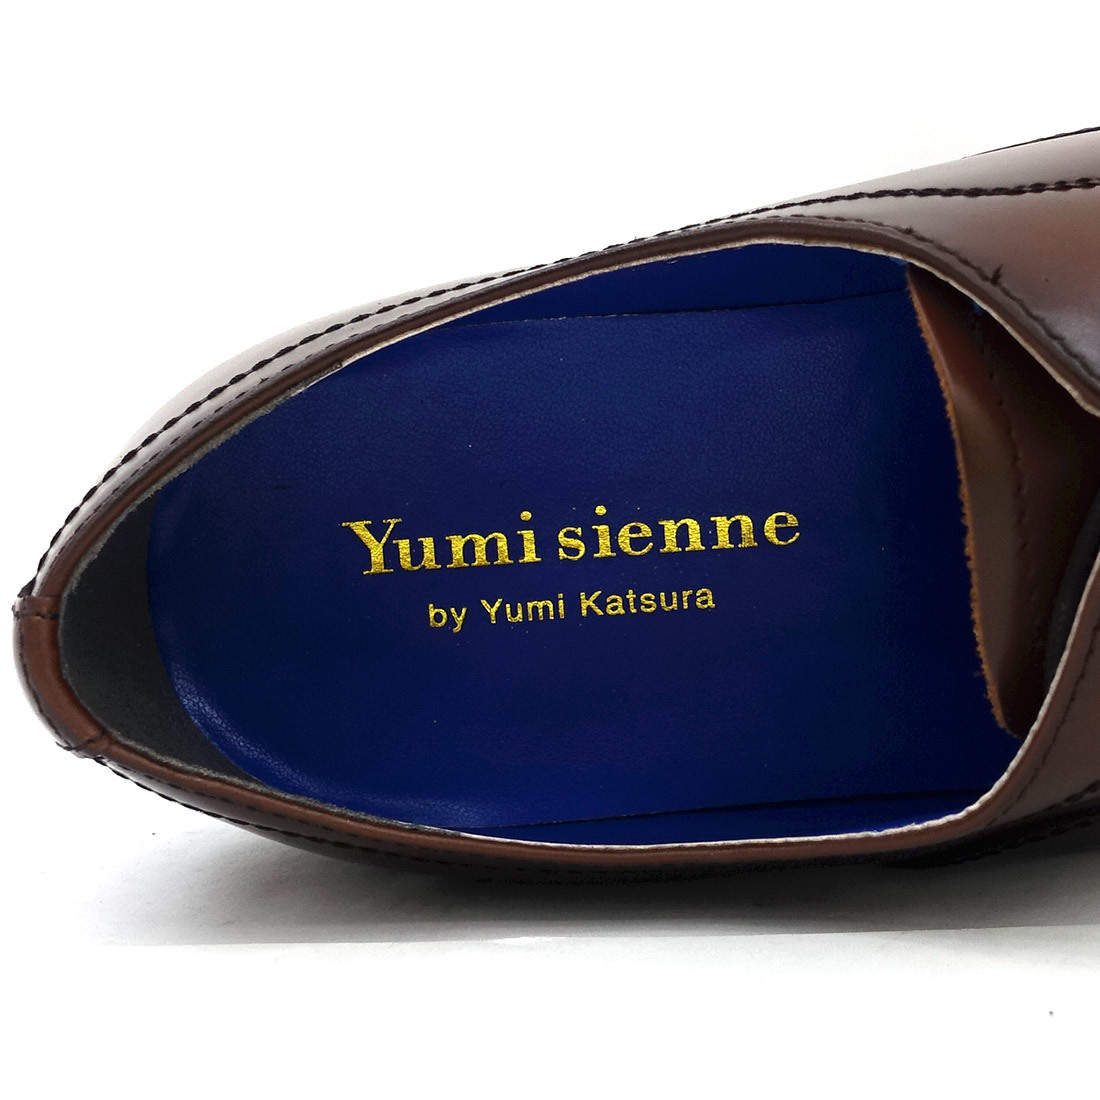 ▲Yumi Sienne ユミジェンヌ YS8305 ビジネスシューズ ストレートチップ 本革 メンズ 革靴 ブラウン Brown 茶 25.0cm (0910010666-br-s250)_画像9